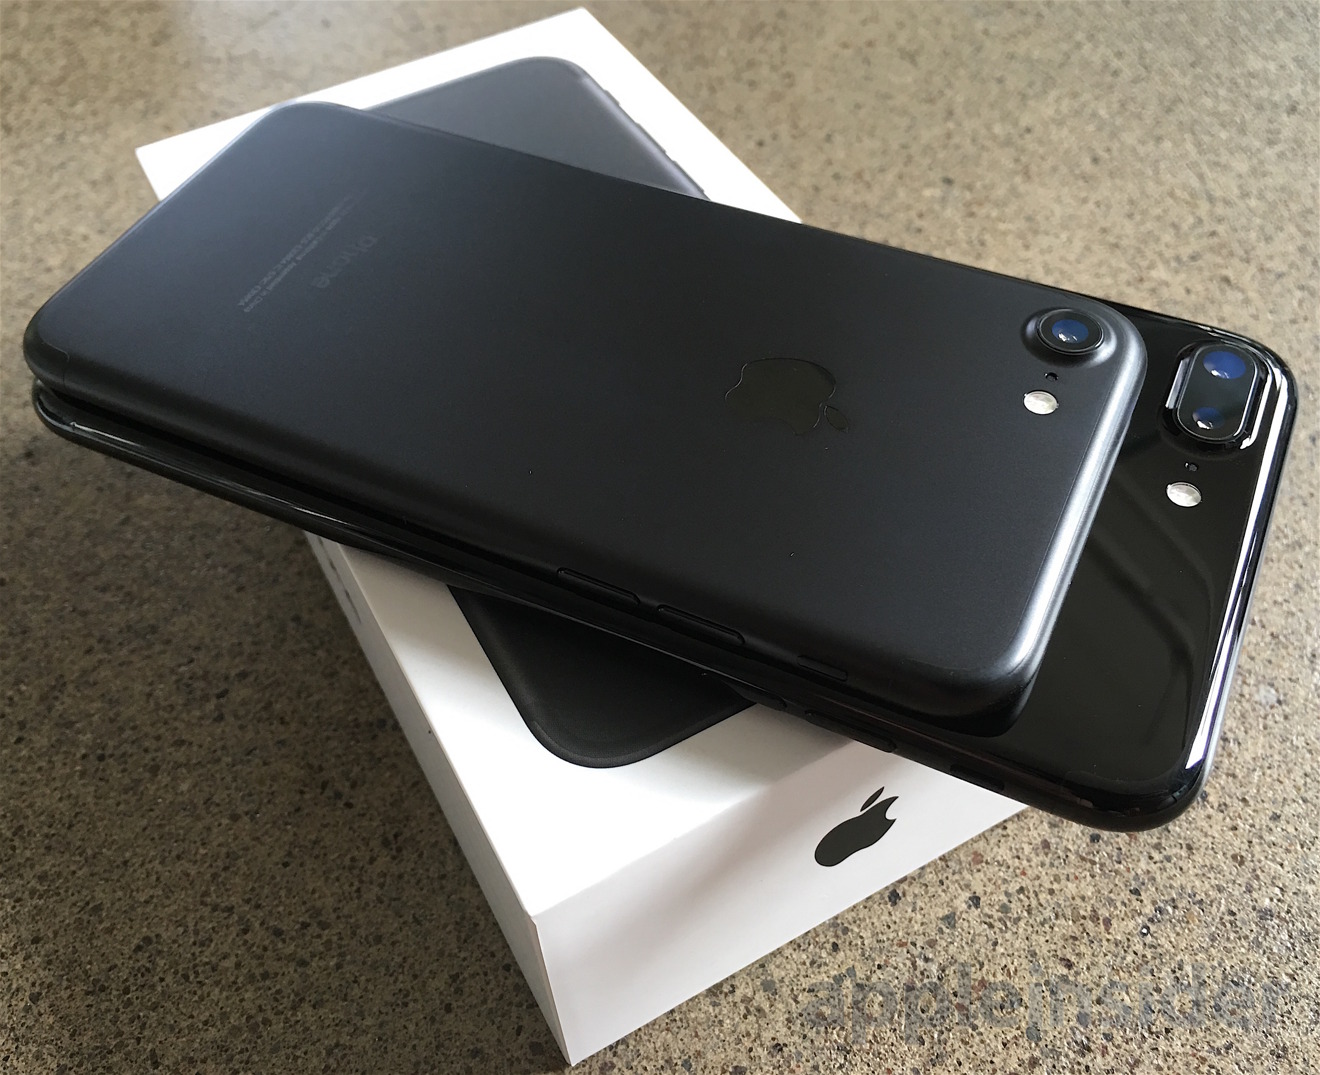 Original Apple iPhone 7 Plus-vide emballage d'origine neuf dans sa boîte-JET BLACK 256 Go 